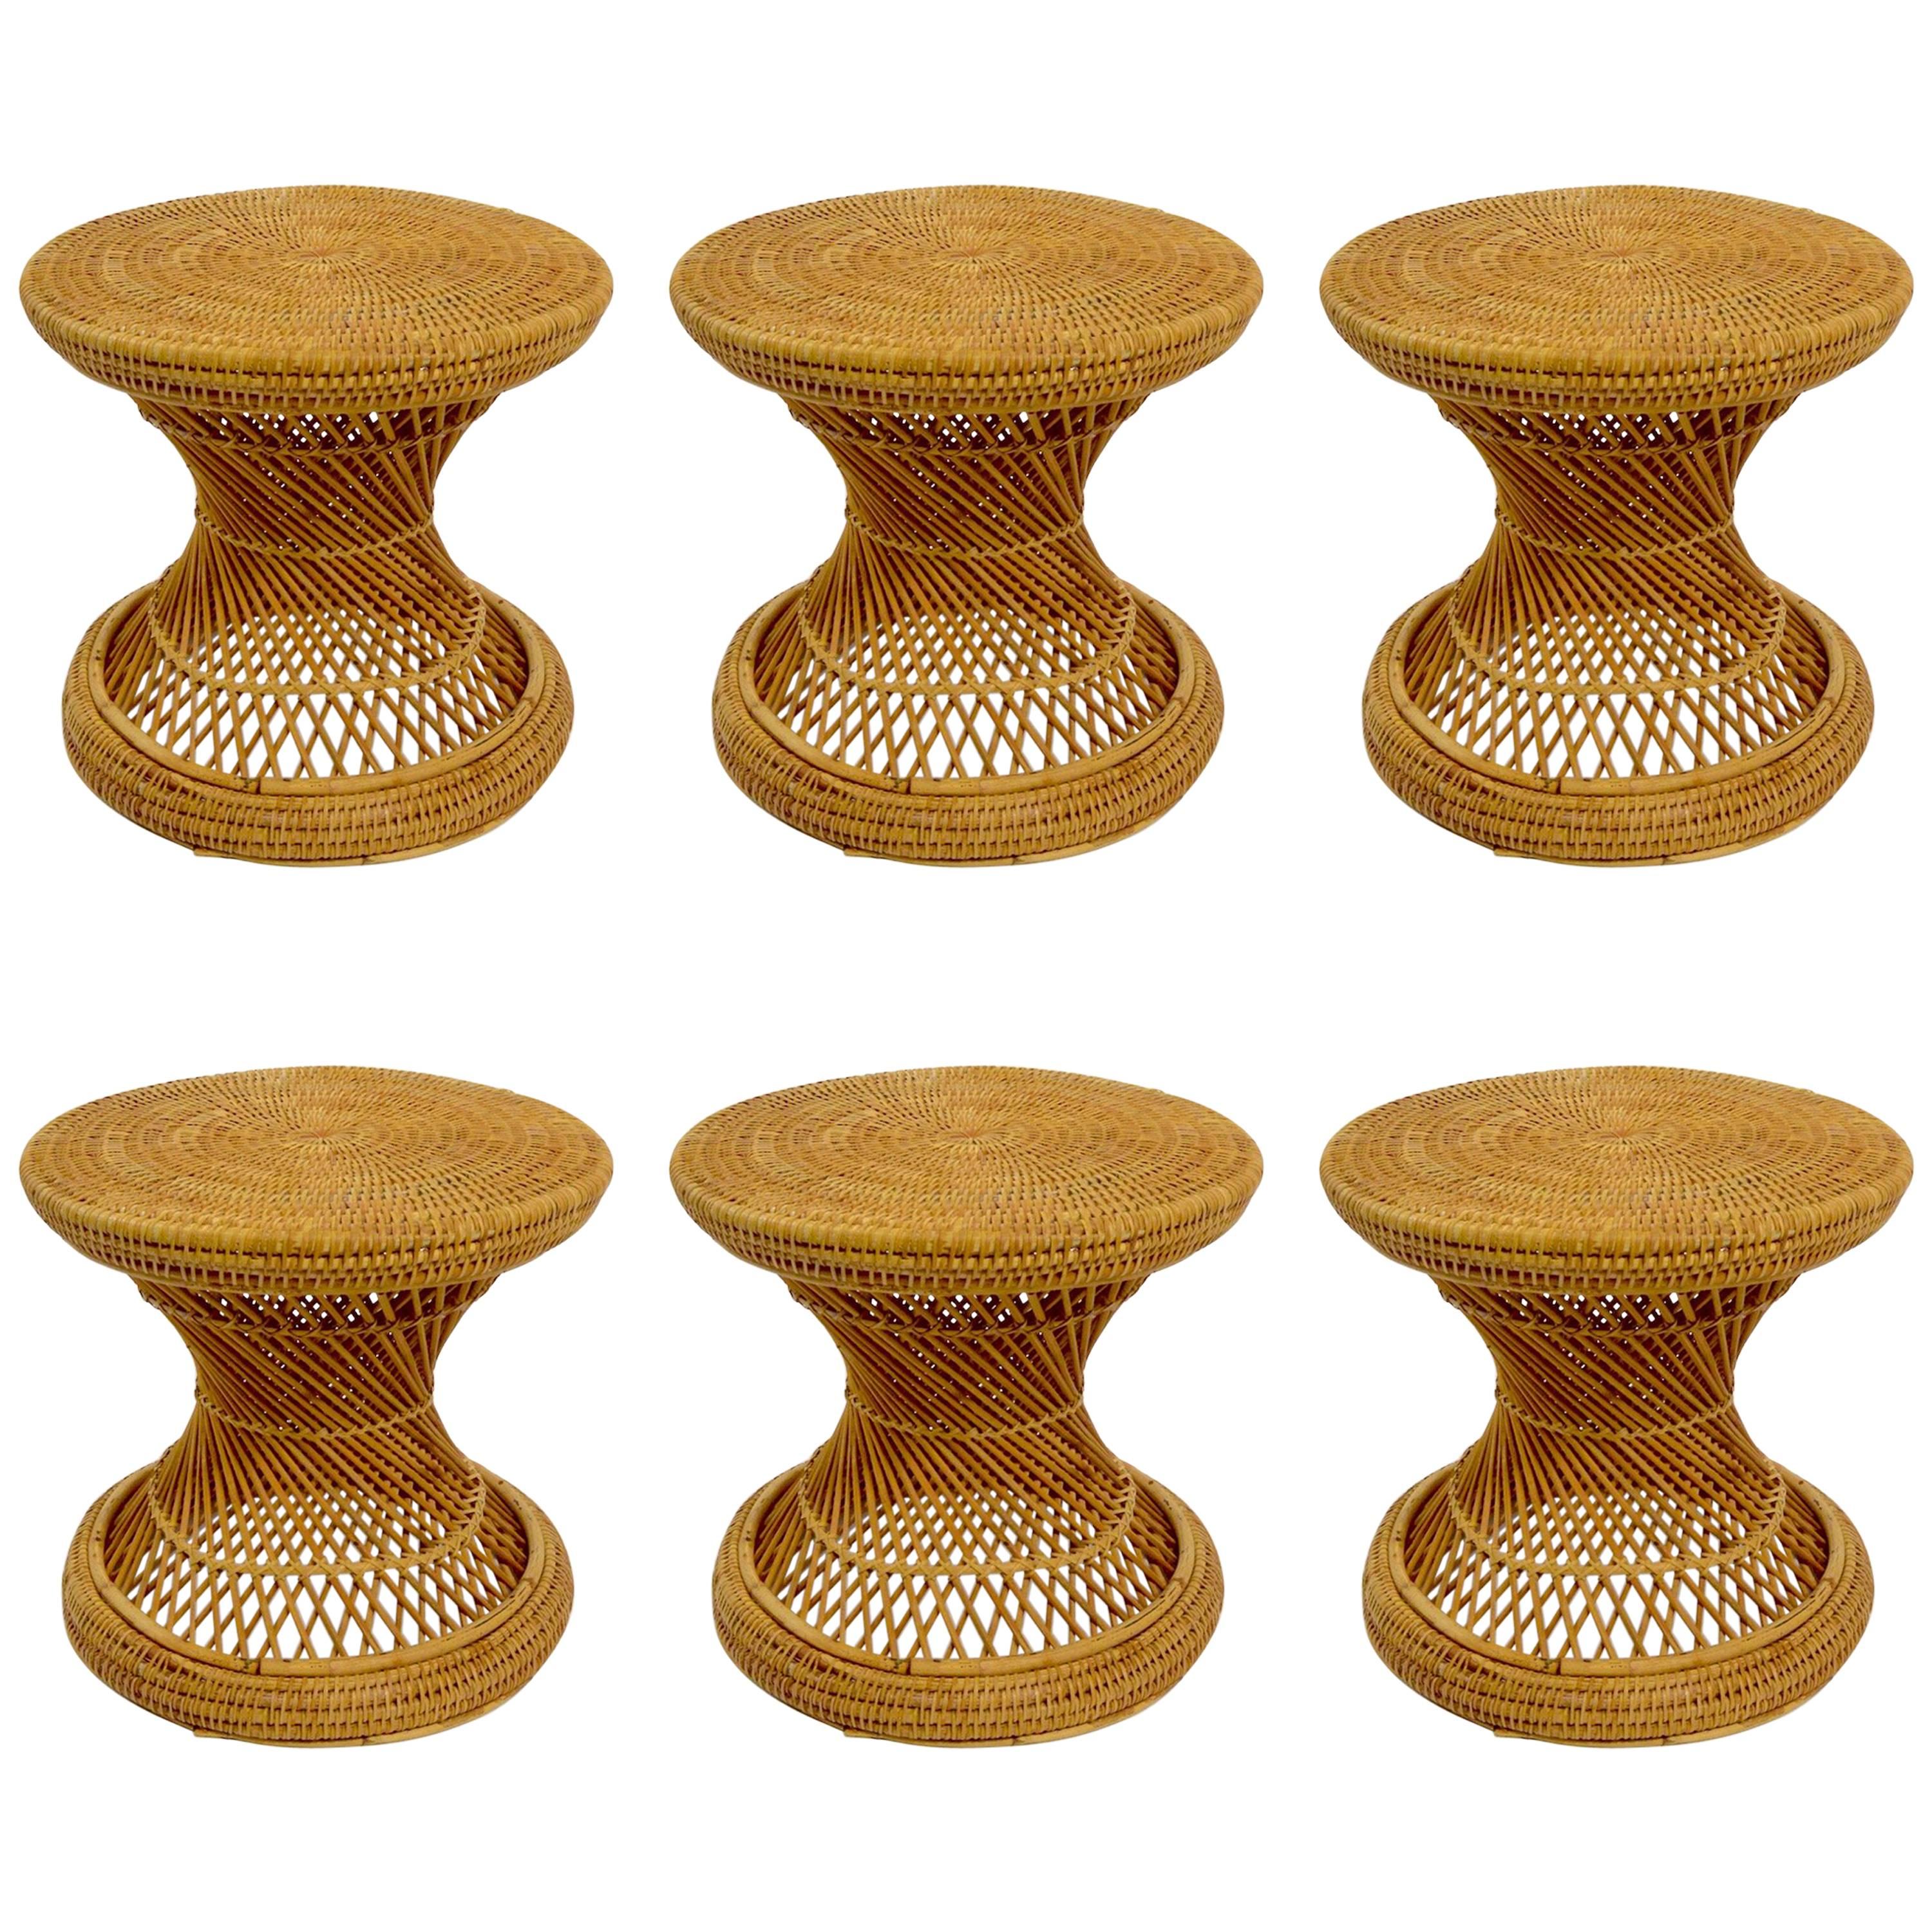 Set of Six Woven Wicker Stools